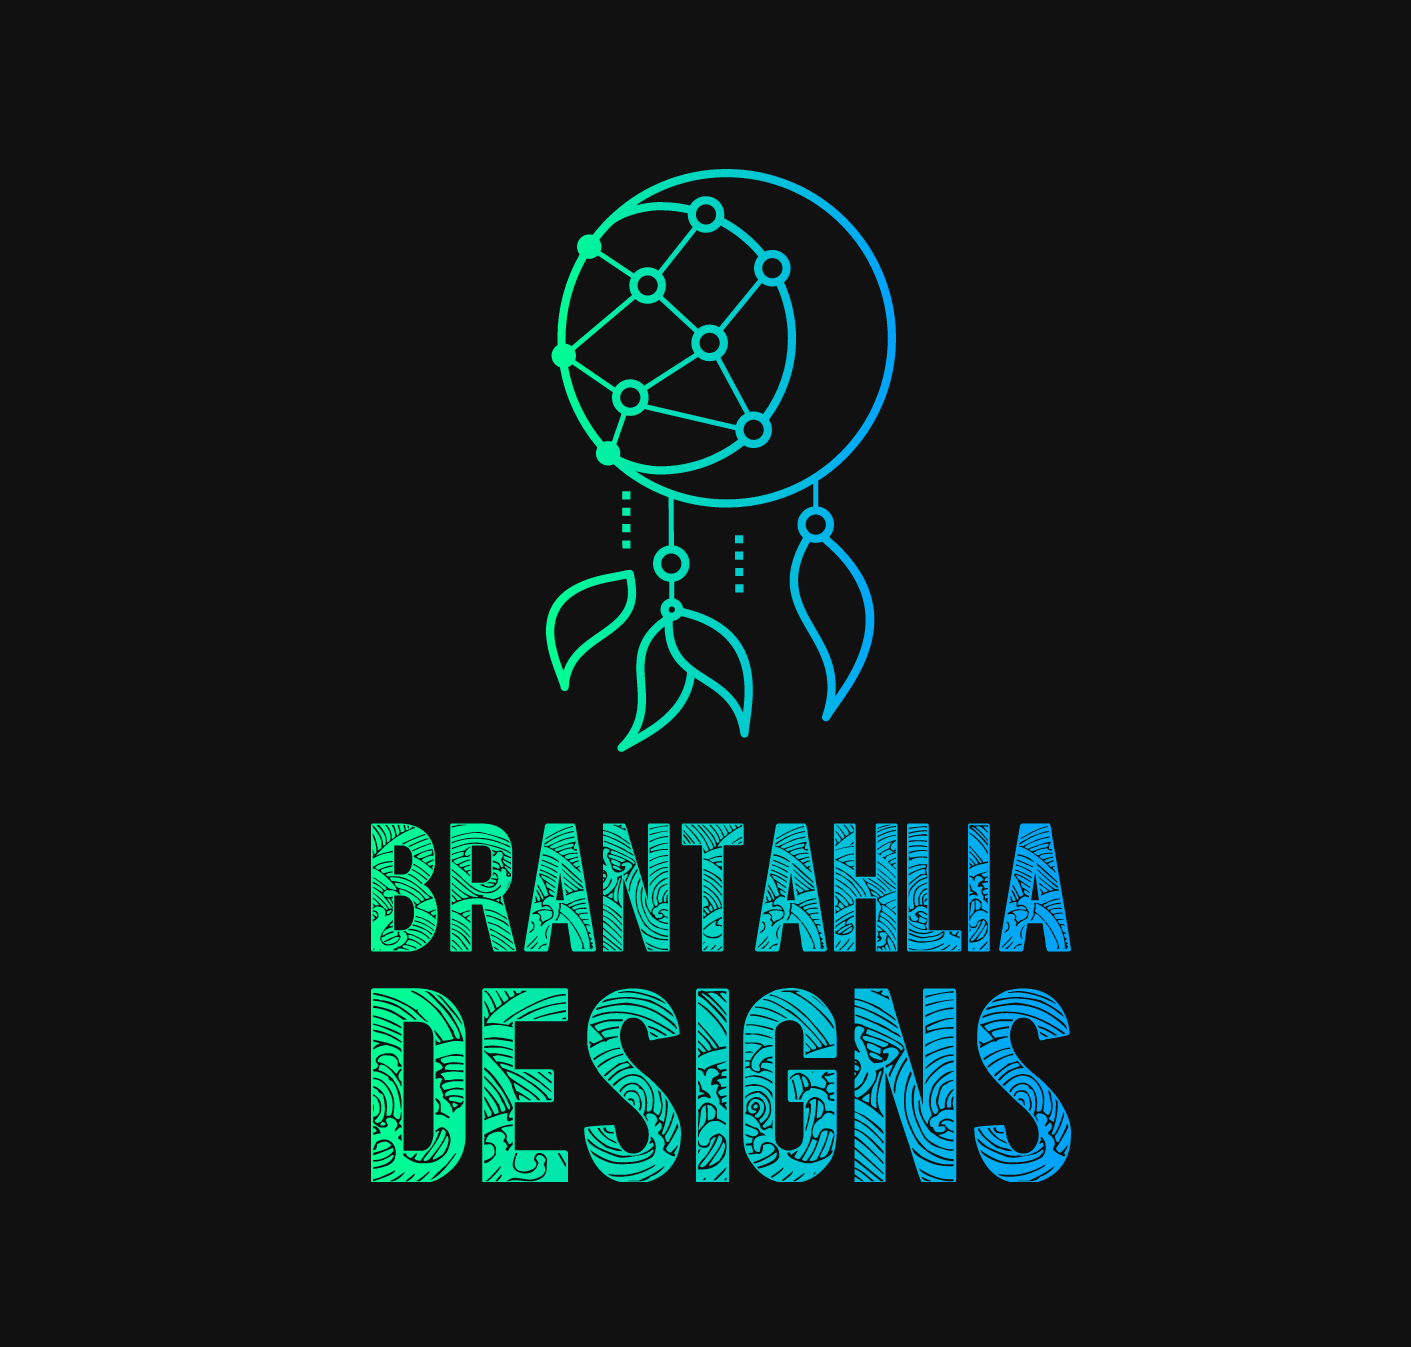 Brantahlia Designs